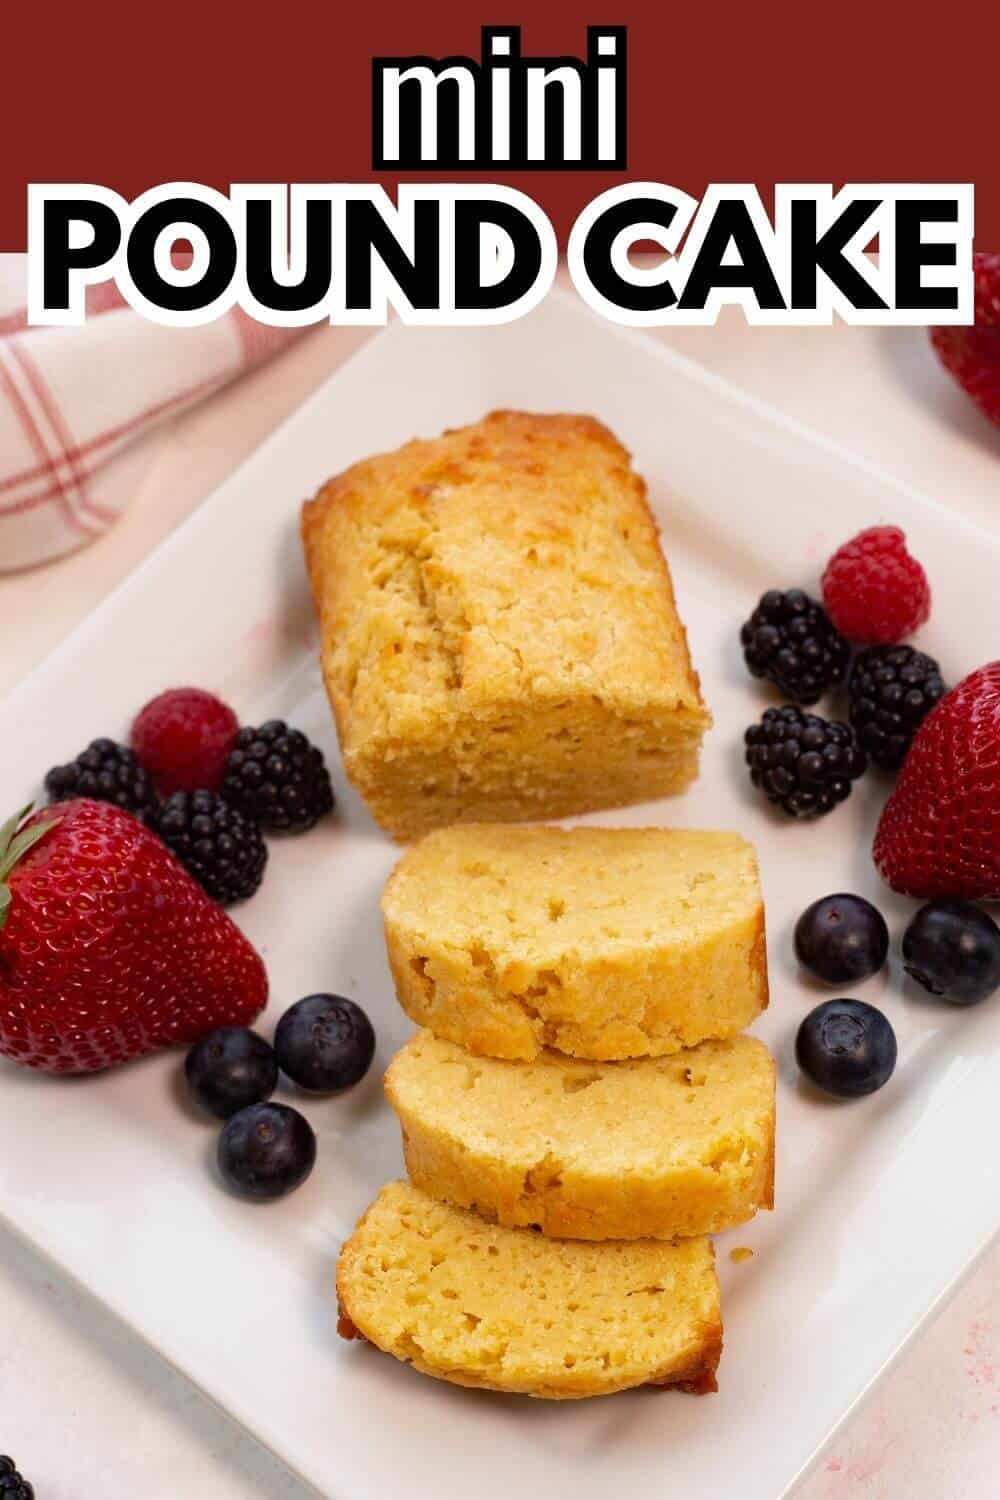 Mini pound cake with recipe title text.